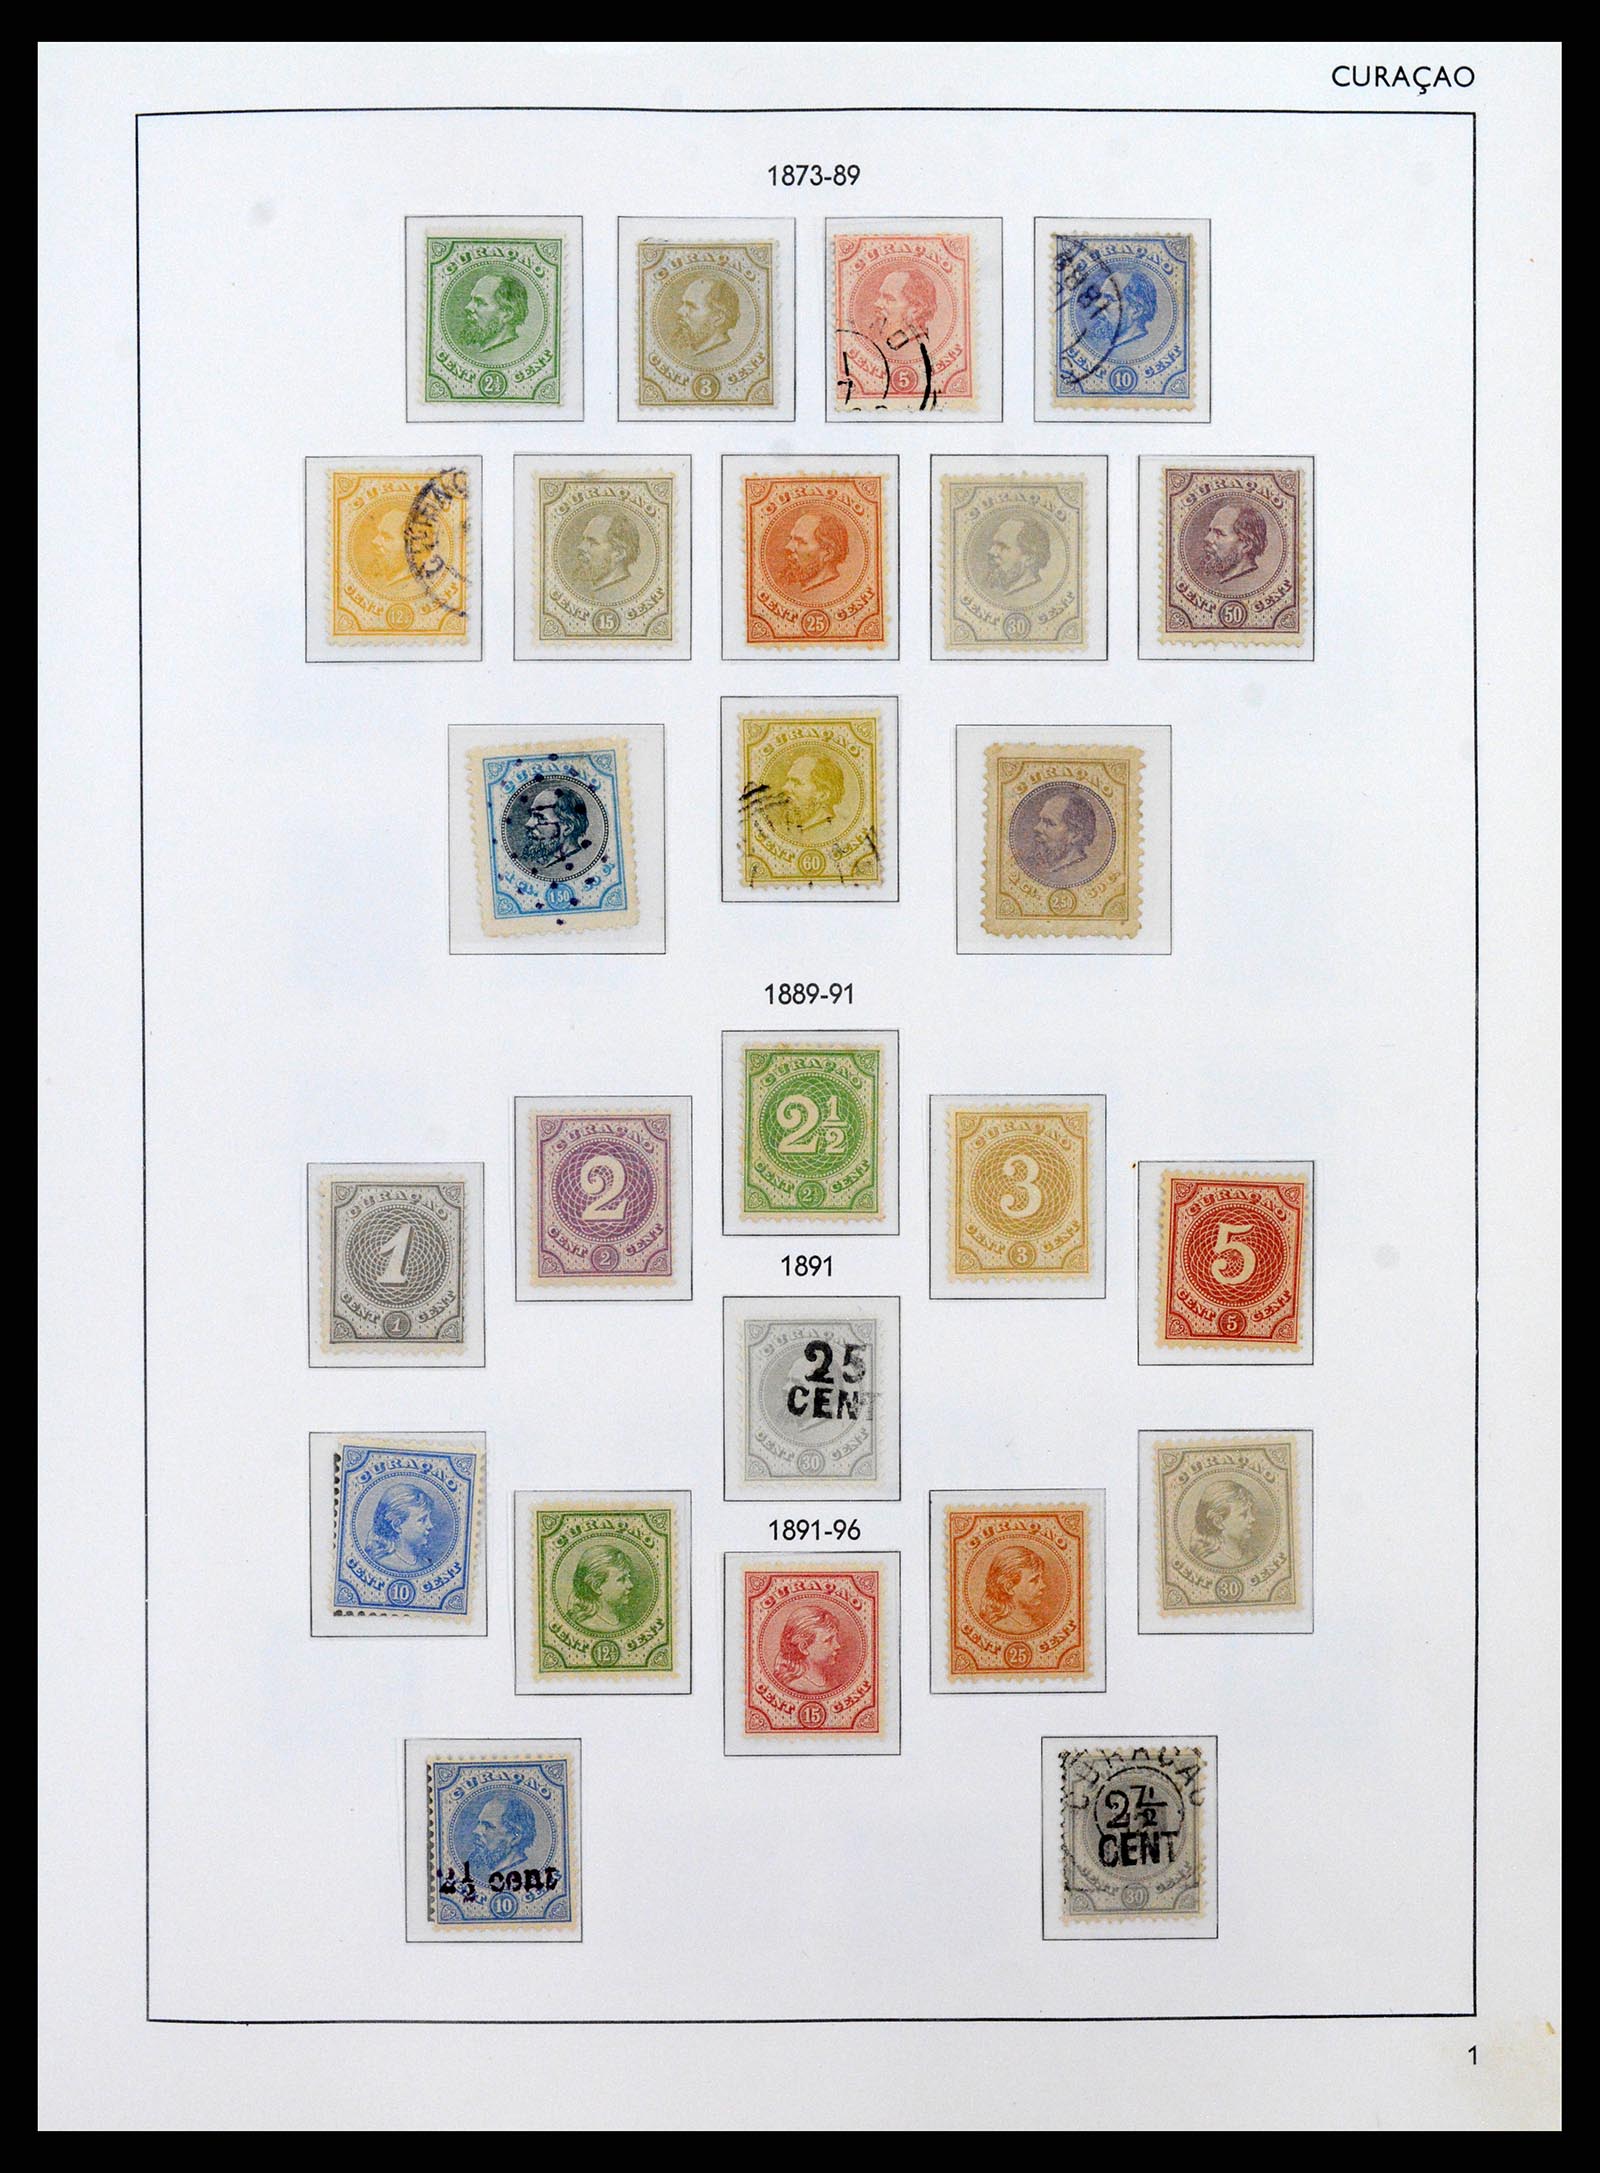 38069 0001 - Stamp collection 38069 Curaçao/Antilles 1873-1988.